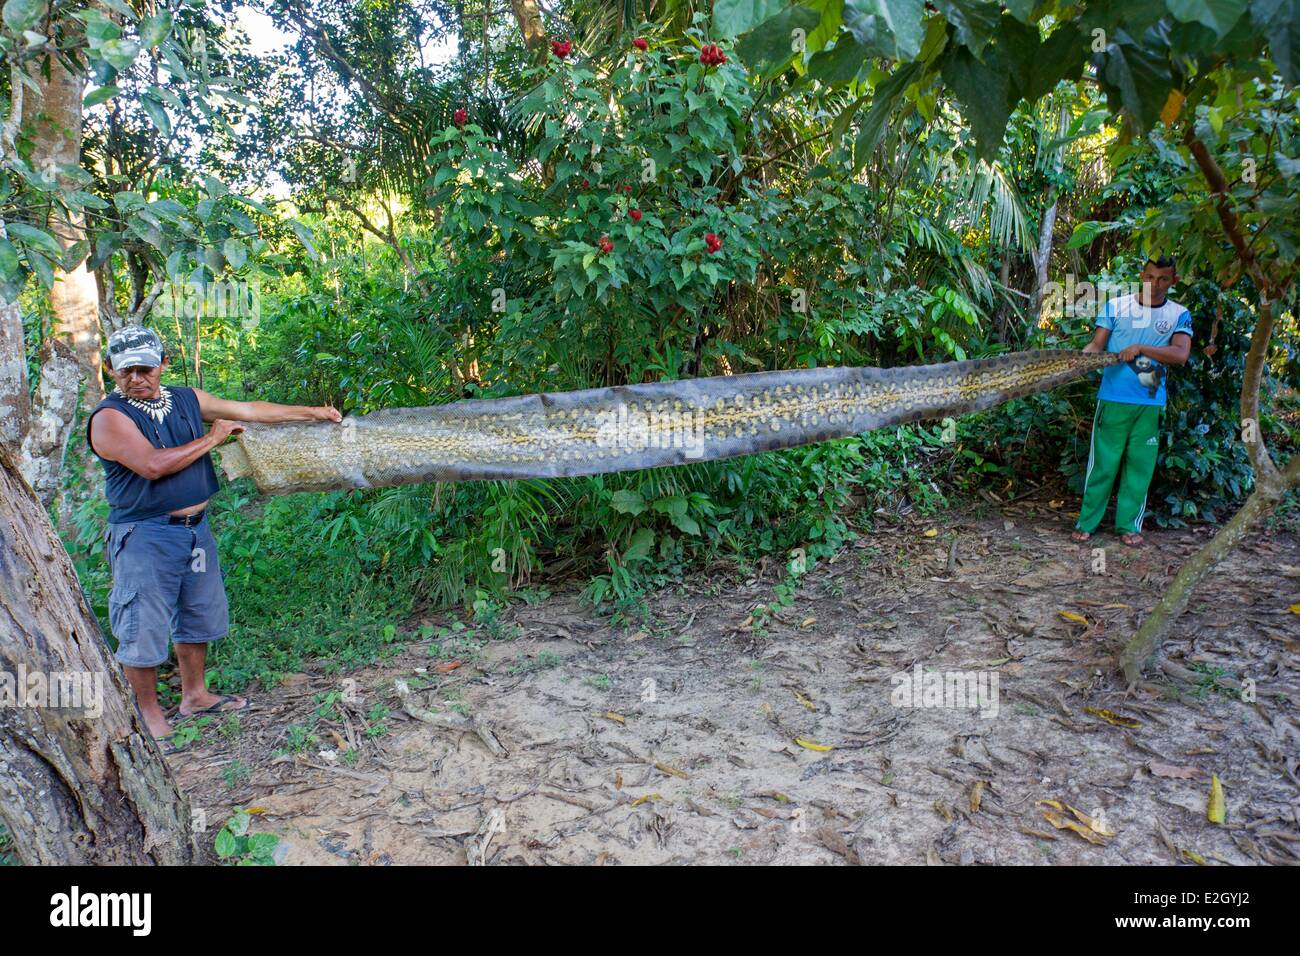 Amazon River Brazil Anaconda High Resolution Stock Photography And Images Alamy